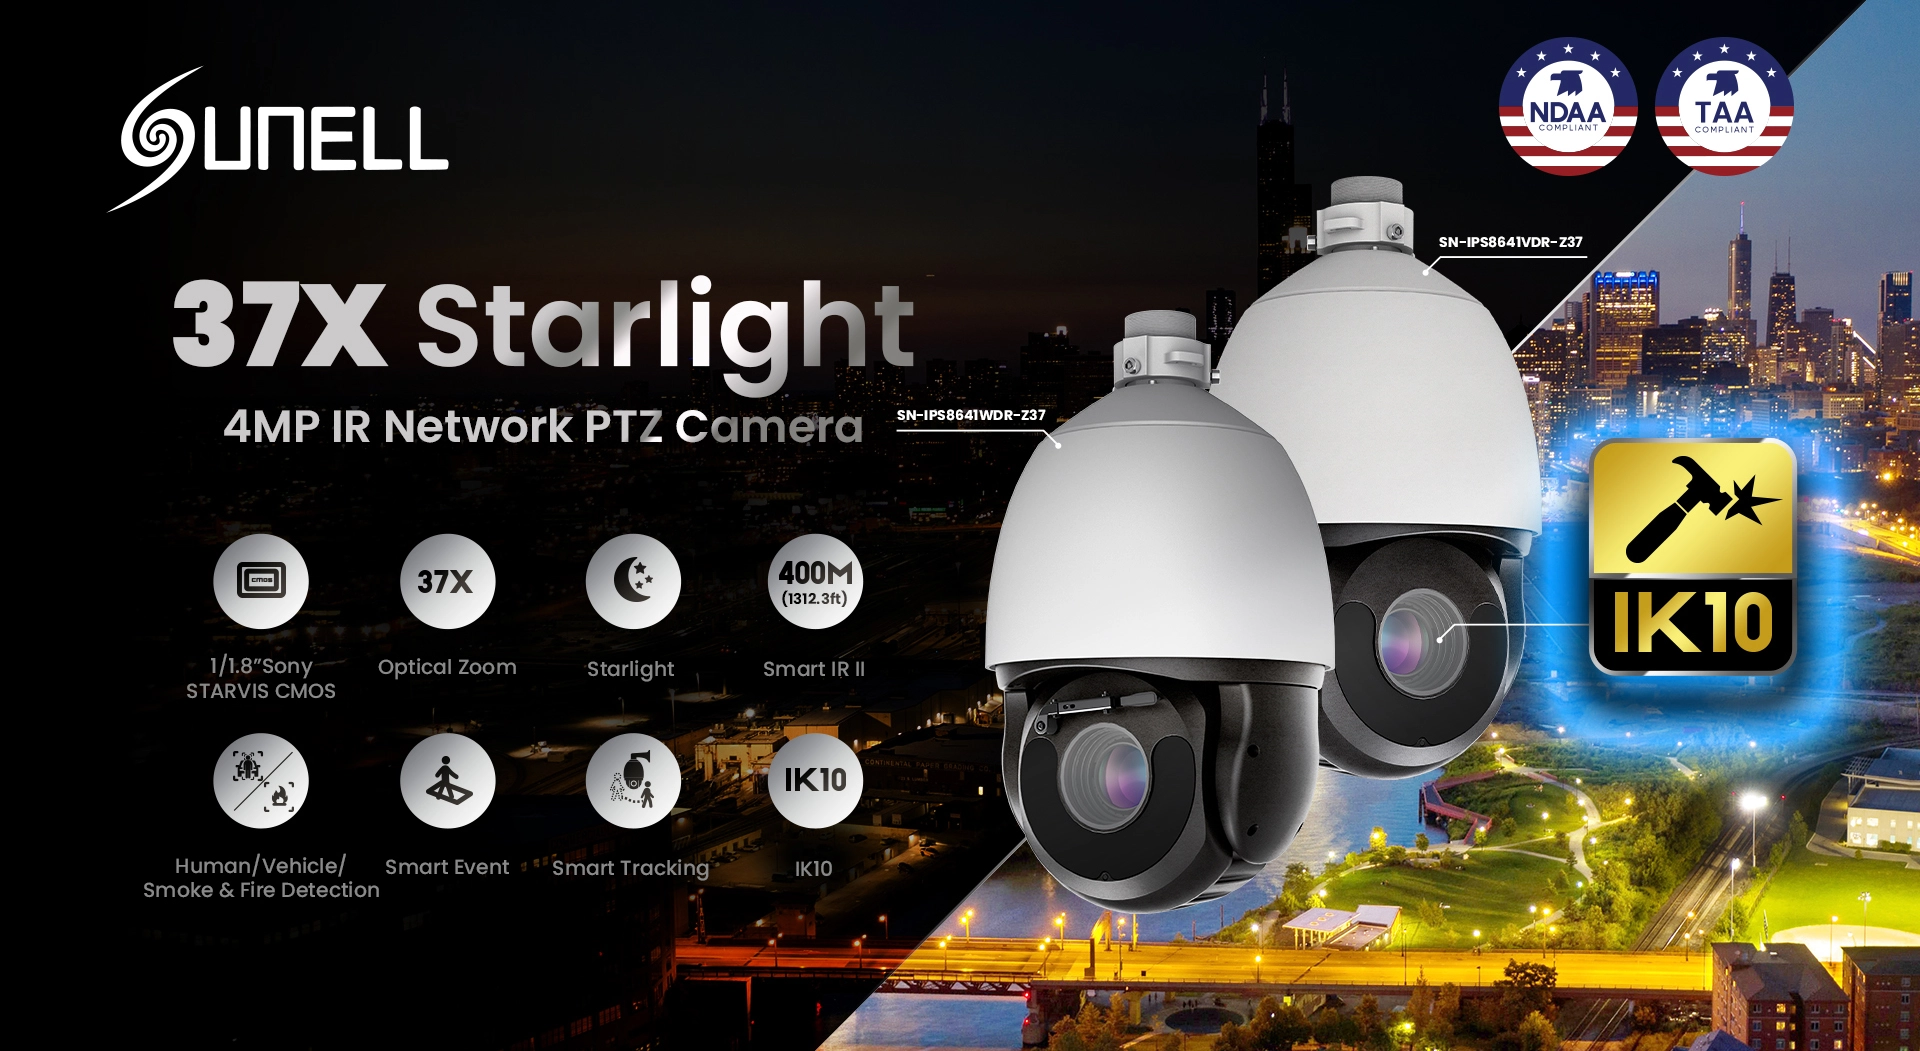 Meet Sunell latest 4MP Starlight PTZ Dome camera